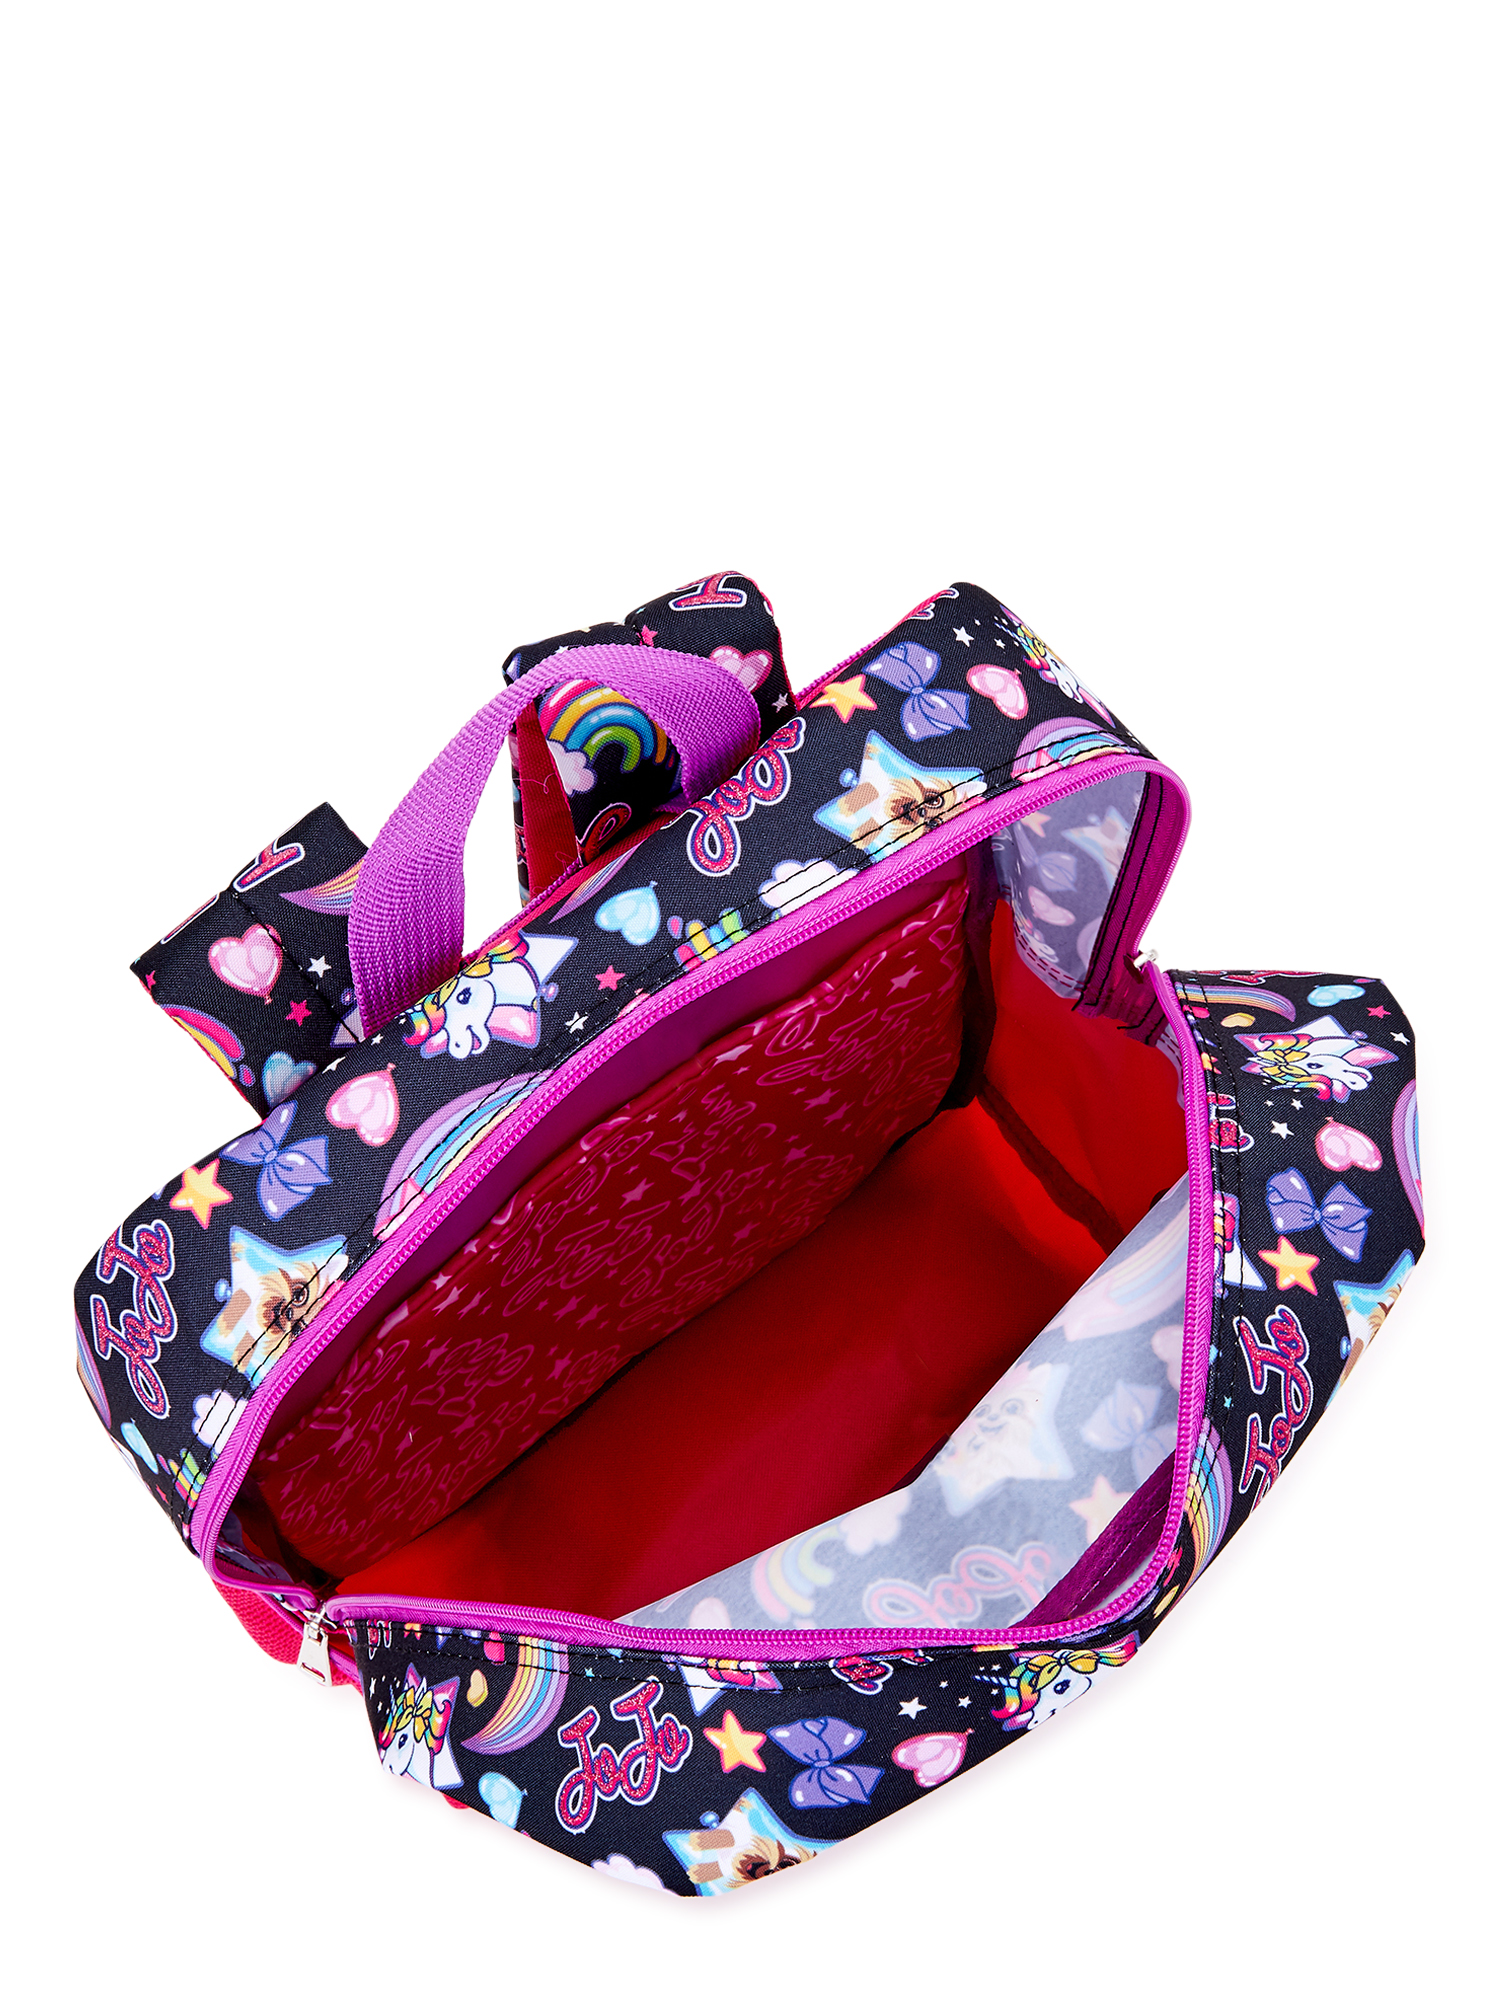 Nickelodeon Jojo Siwa Follow Your Dream Girls' Backpack - image 4 of 5